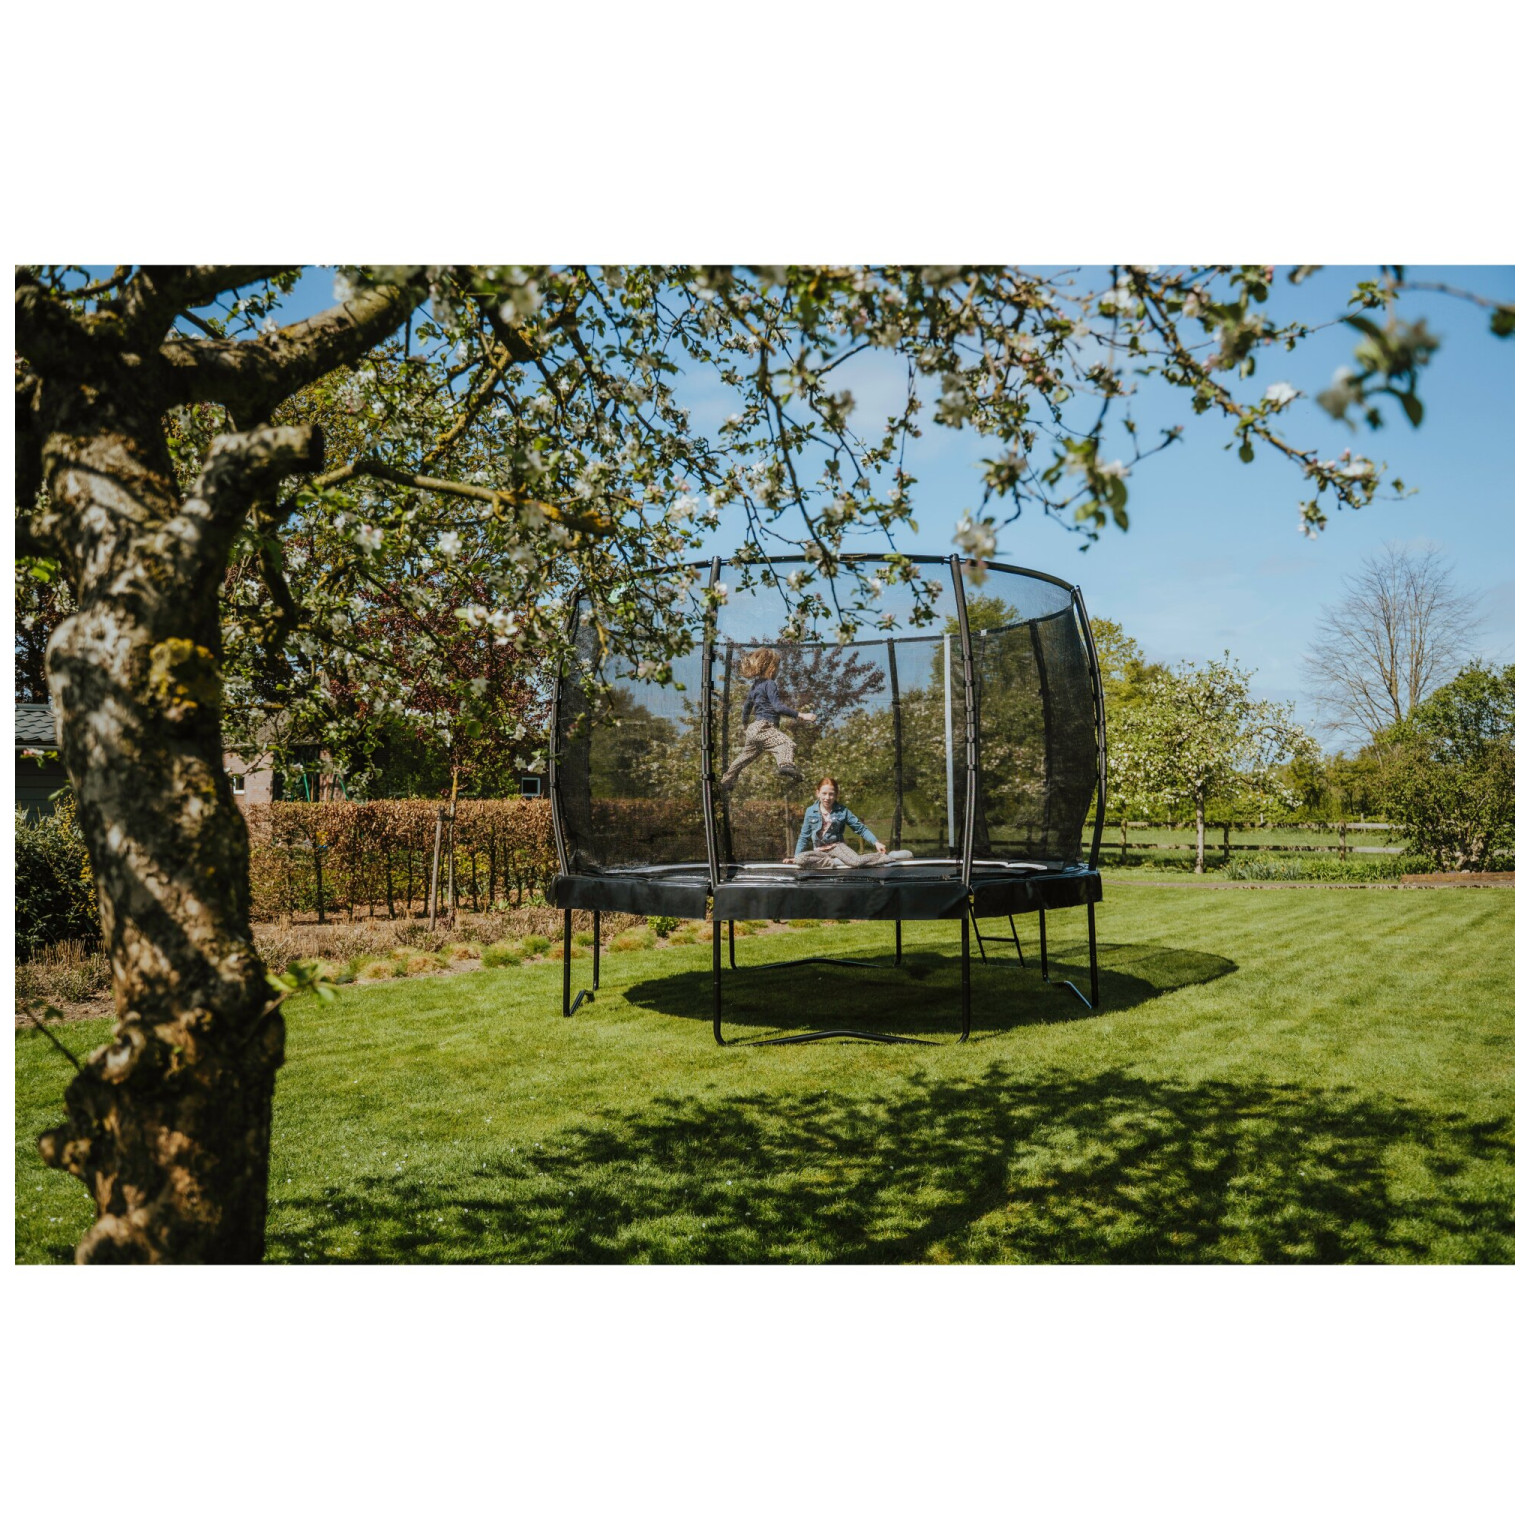 EXIT Allure Classic trampoline ø366cm - groen